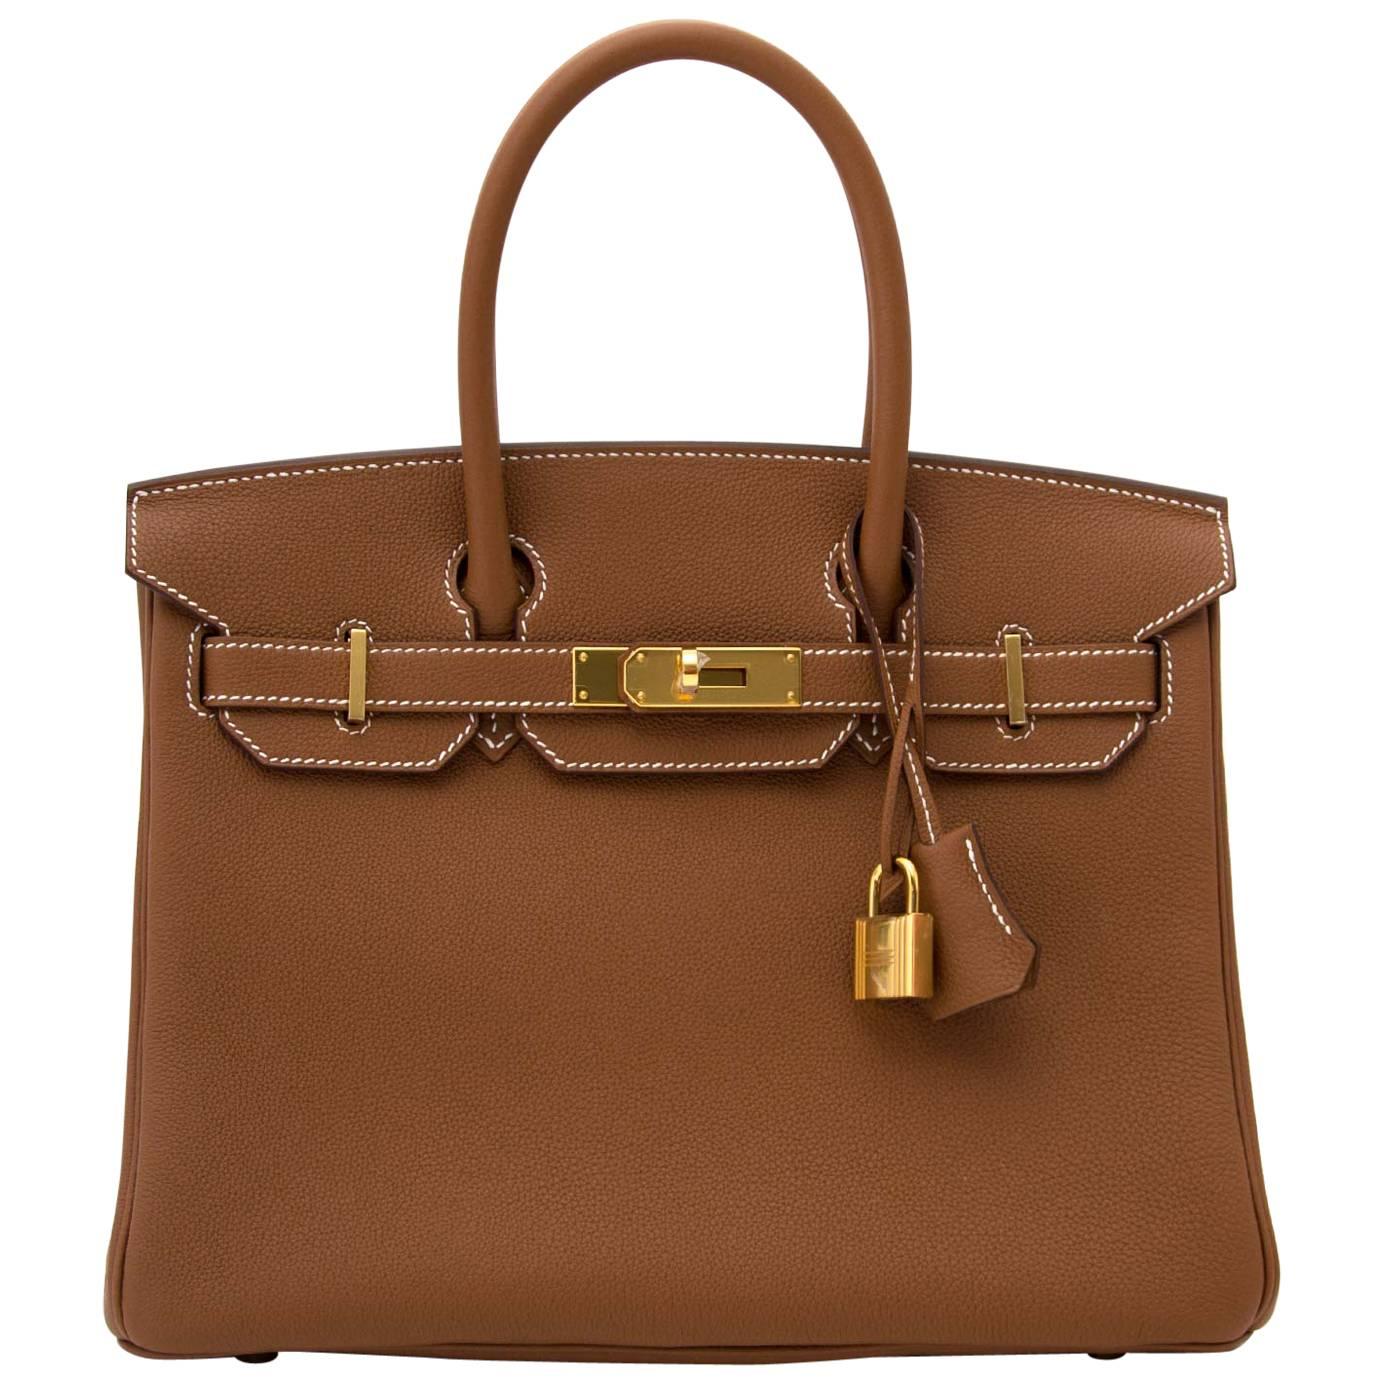 Hermès 30 Togo Gold GHW Birkin Bag